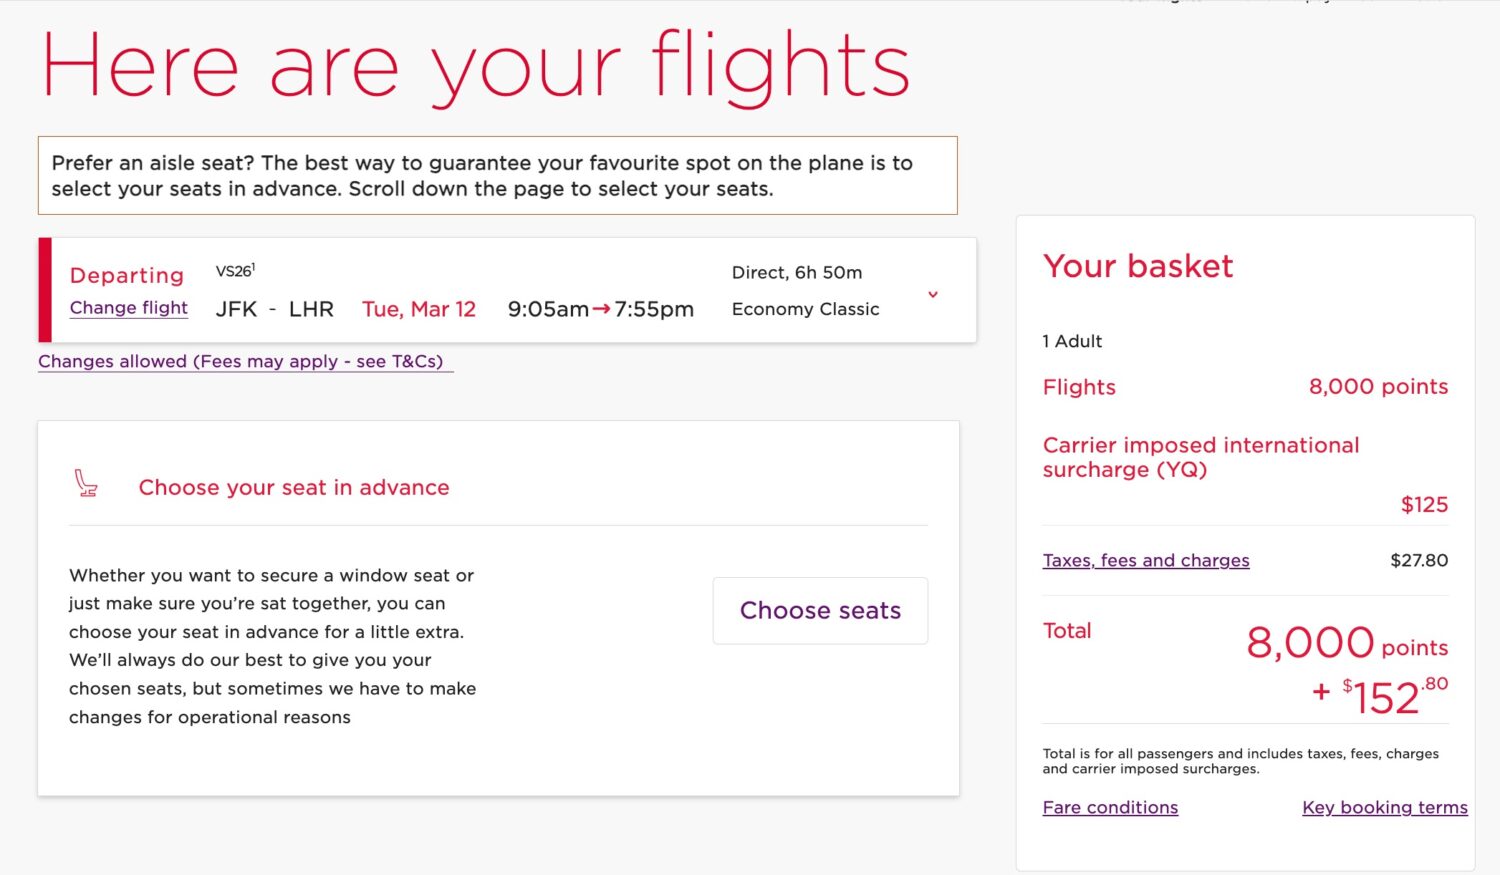 Virgin Atlantic New York (JFK) to London (LHR) award flight with a 20% discount